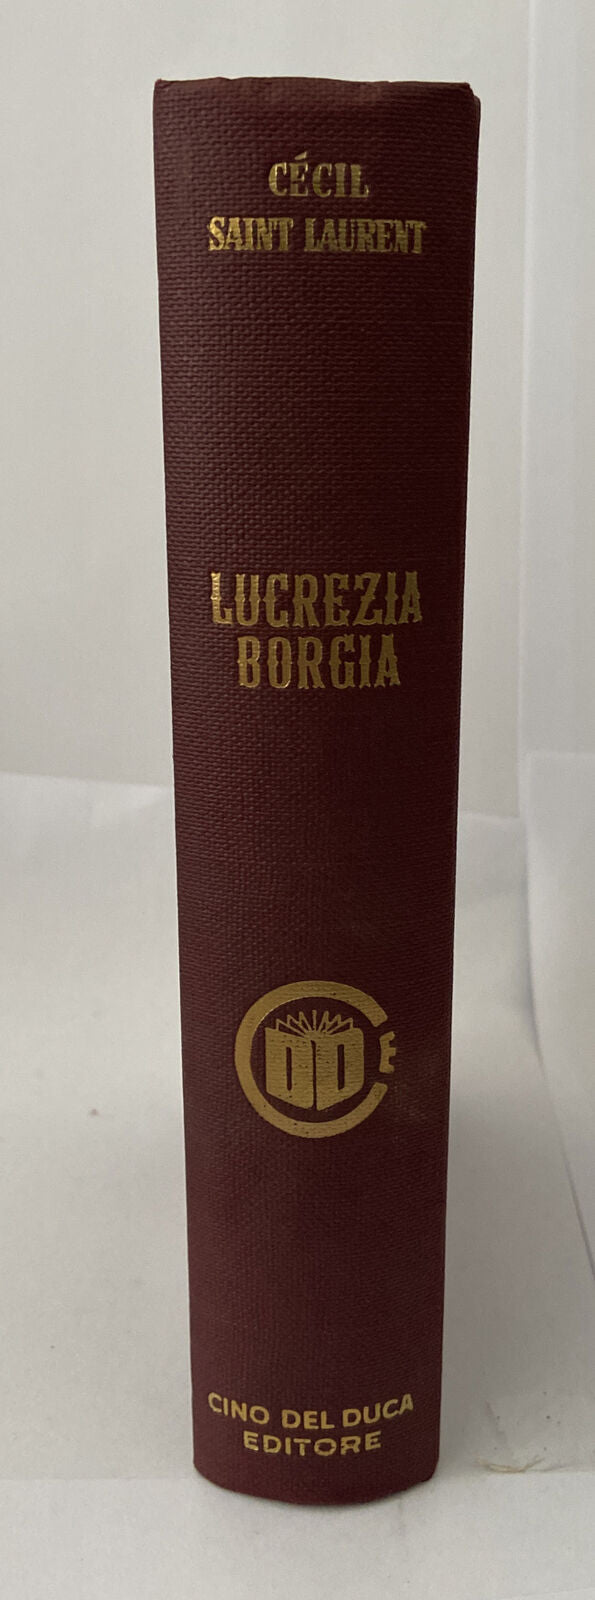 Lucrezia Borgia Cécil Saint Laurent Cino editore 1953 libro vintage rilegato